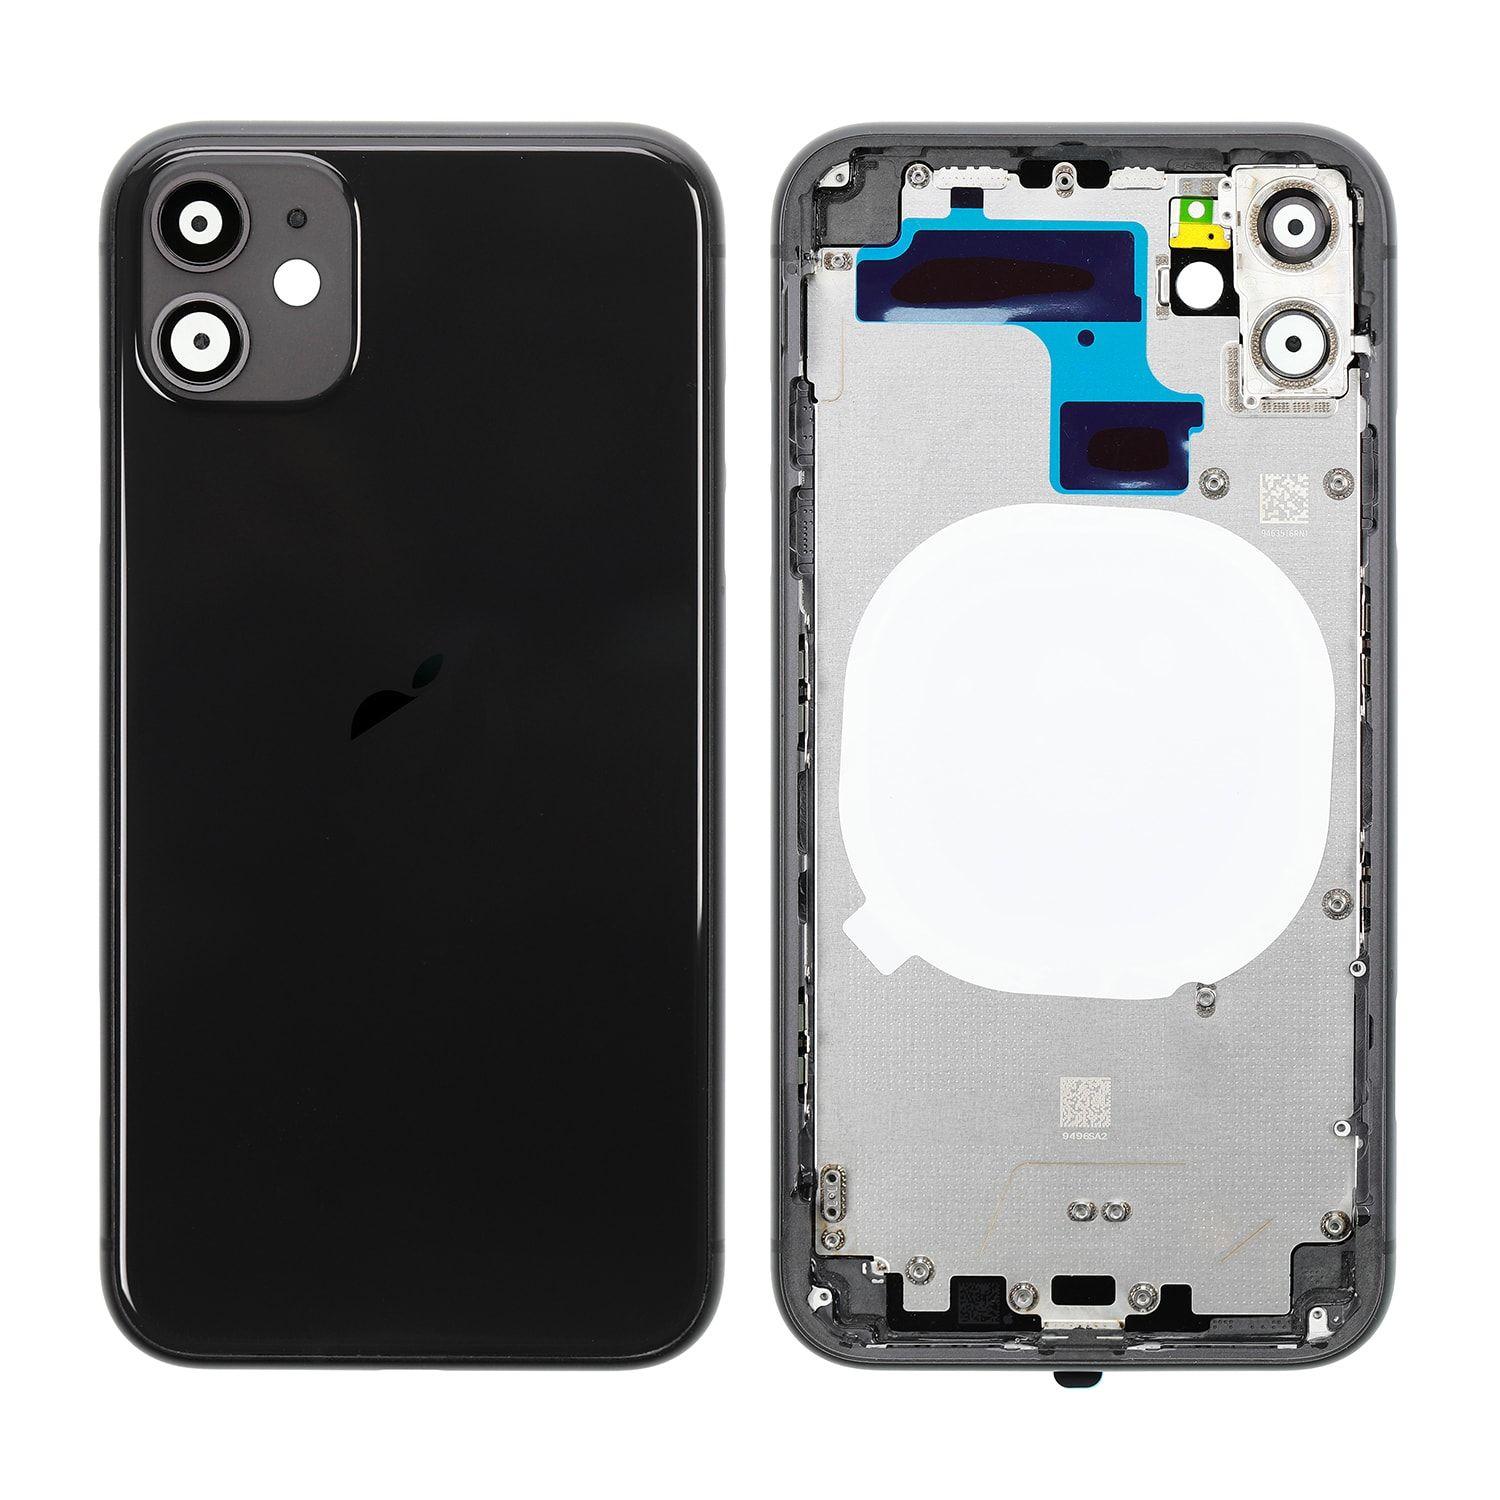 Korpus iPhone 11 + zadní kryt černý